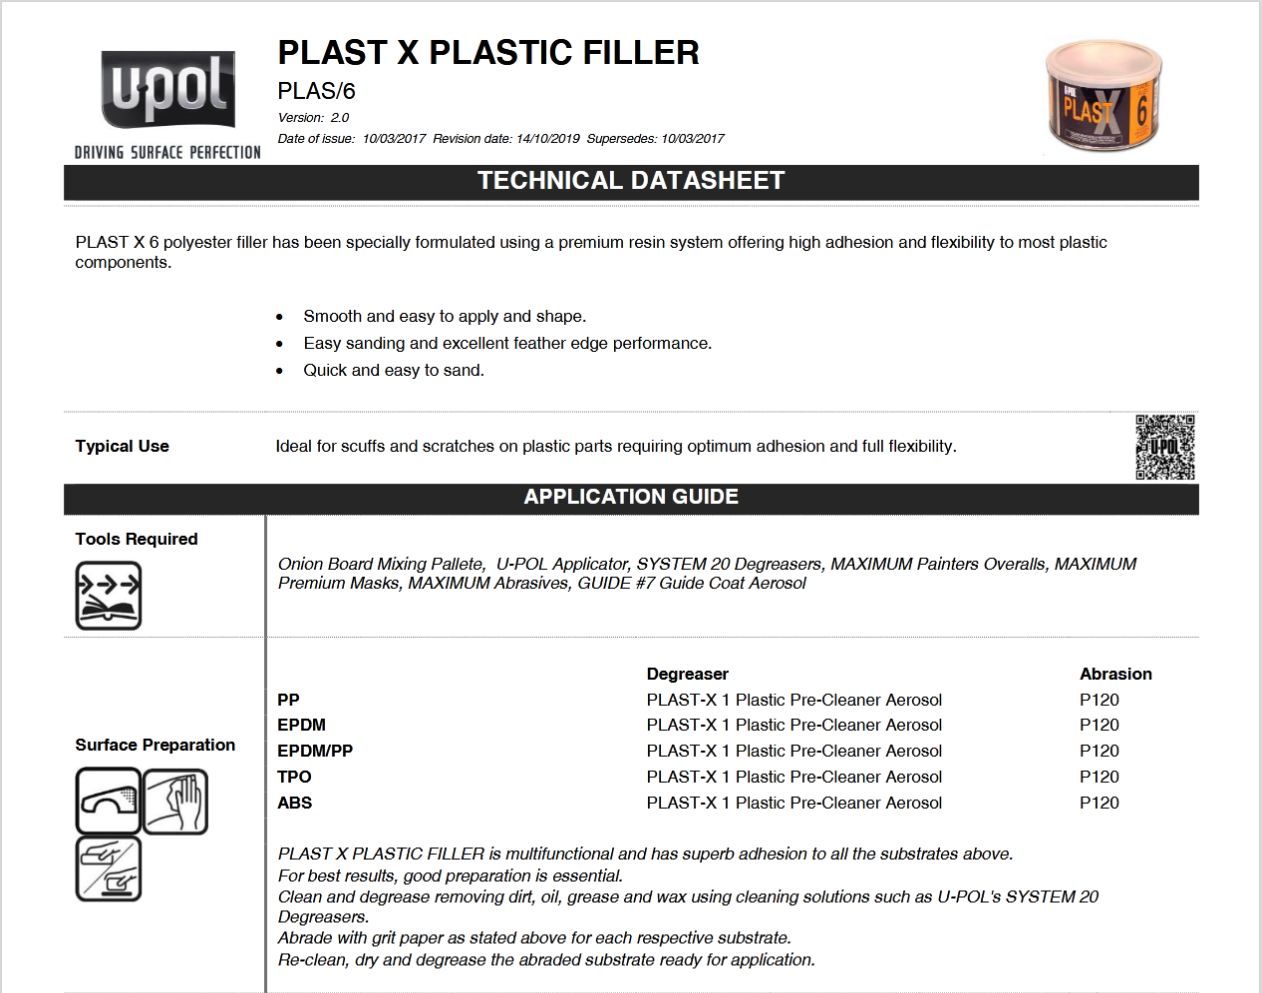 Plast X Highly Flexible Body Filler for Plastics - U-Pol